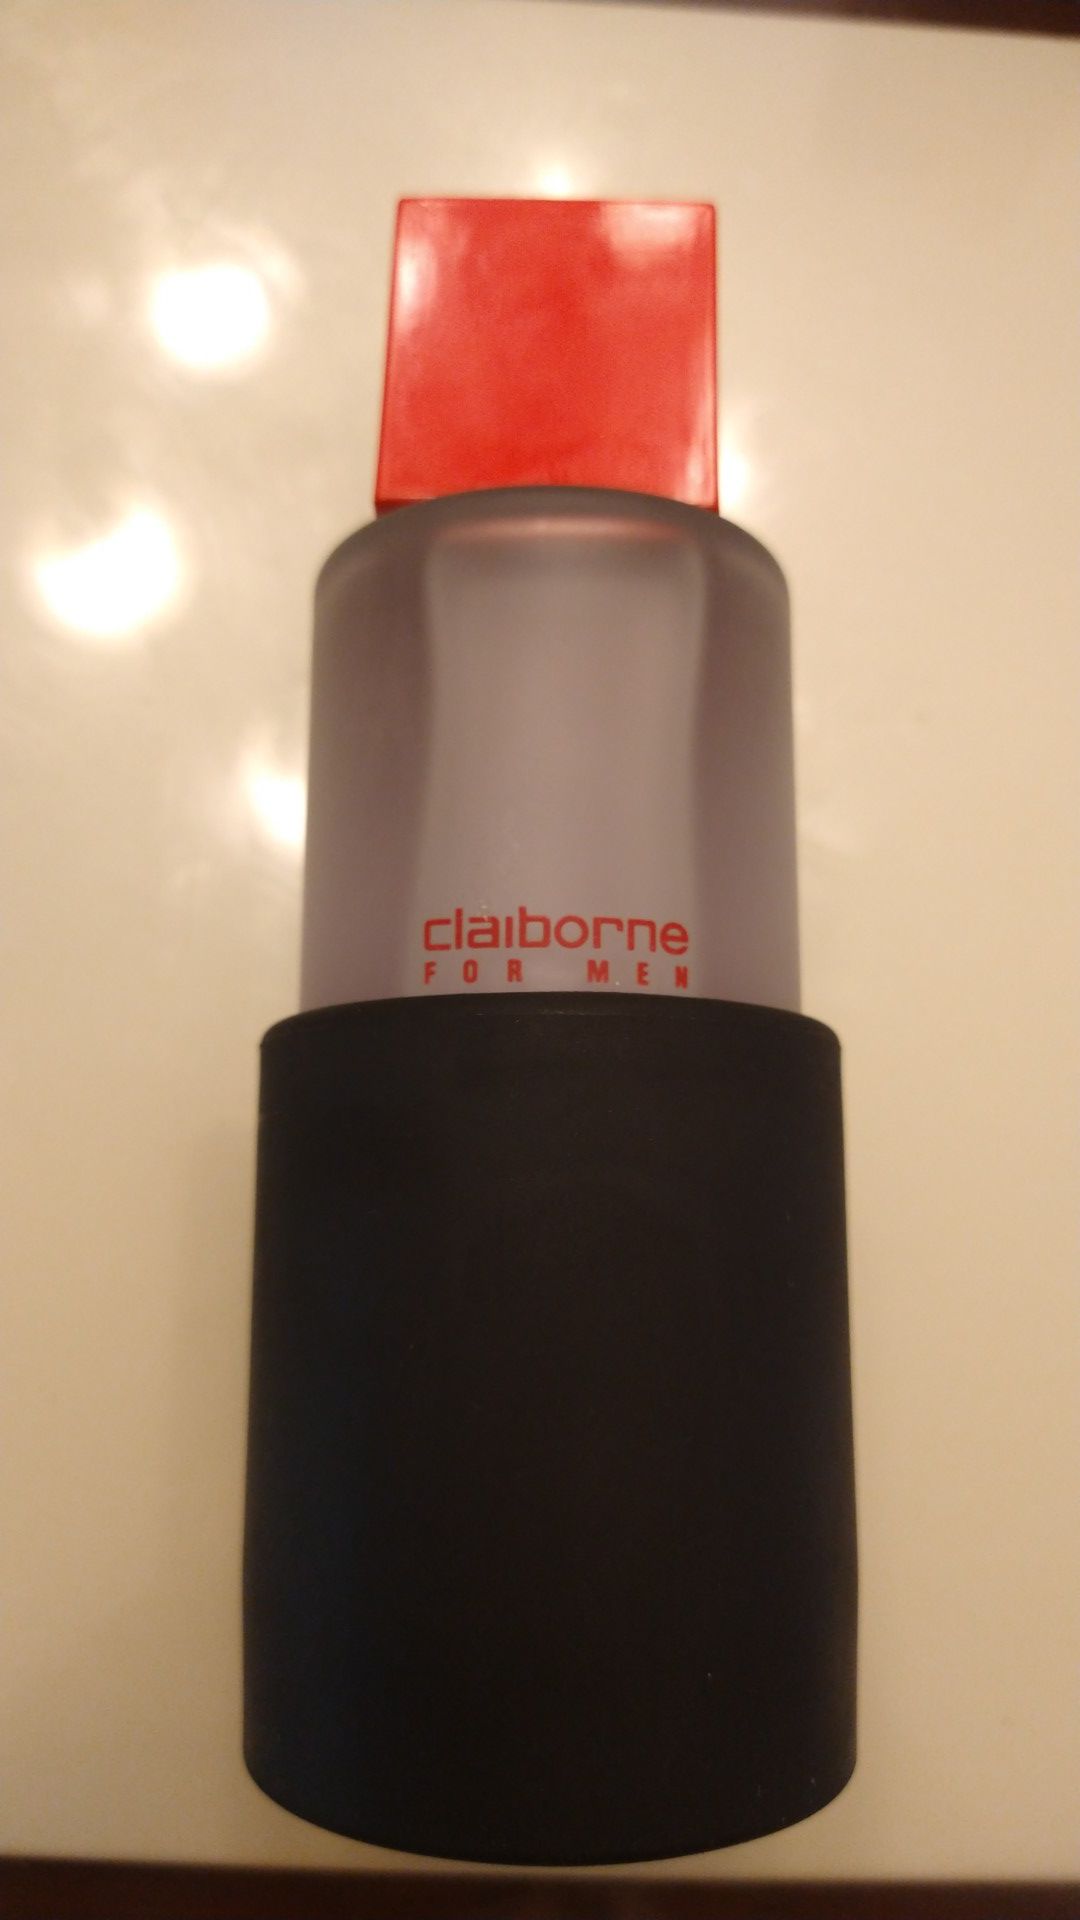 New Claiborne for men cologne spray 3.4 fl oz